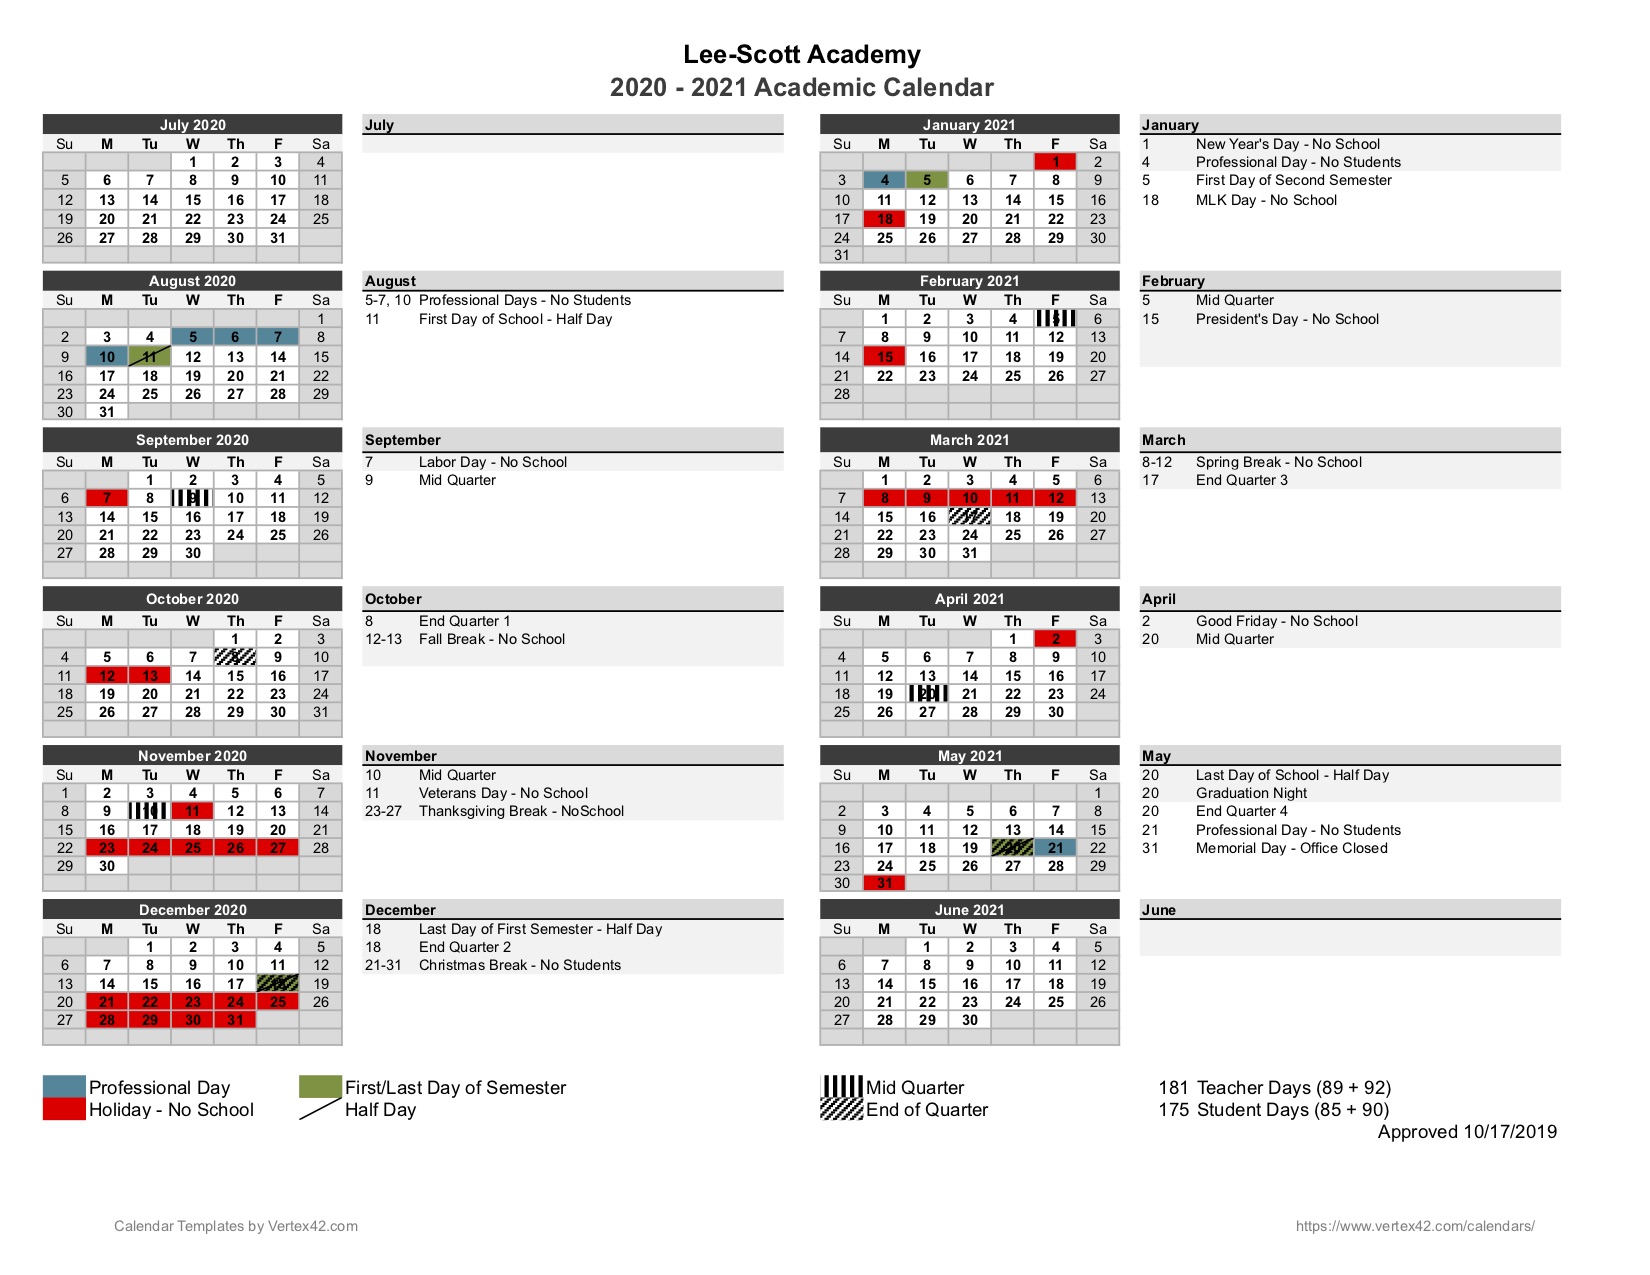 university of alabama 2021 calendar Academic Calendar Lee Scott Academy university of alabama 2021 calendar